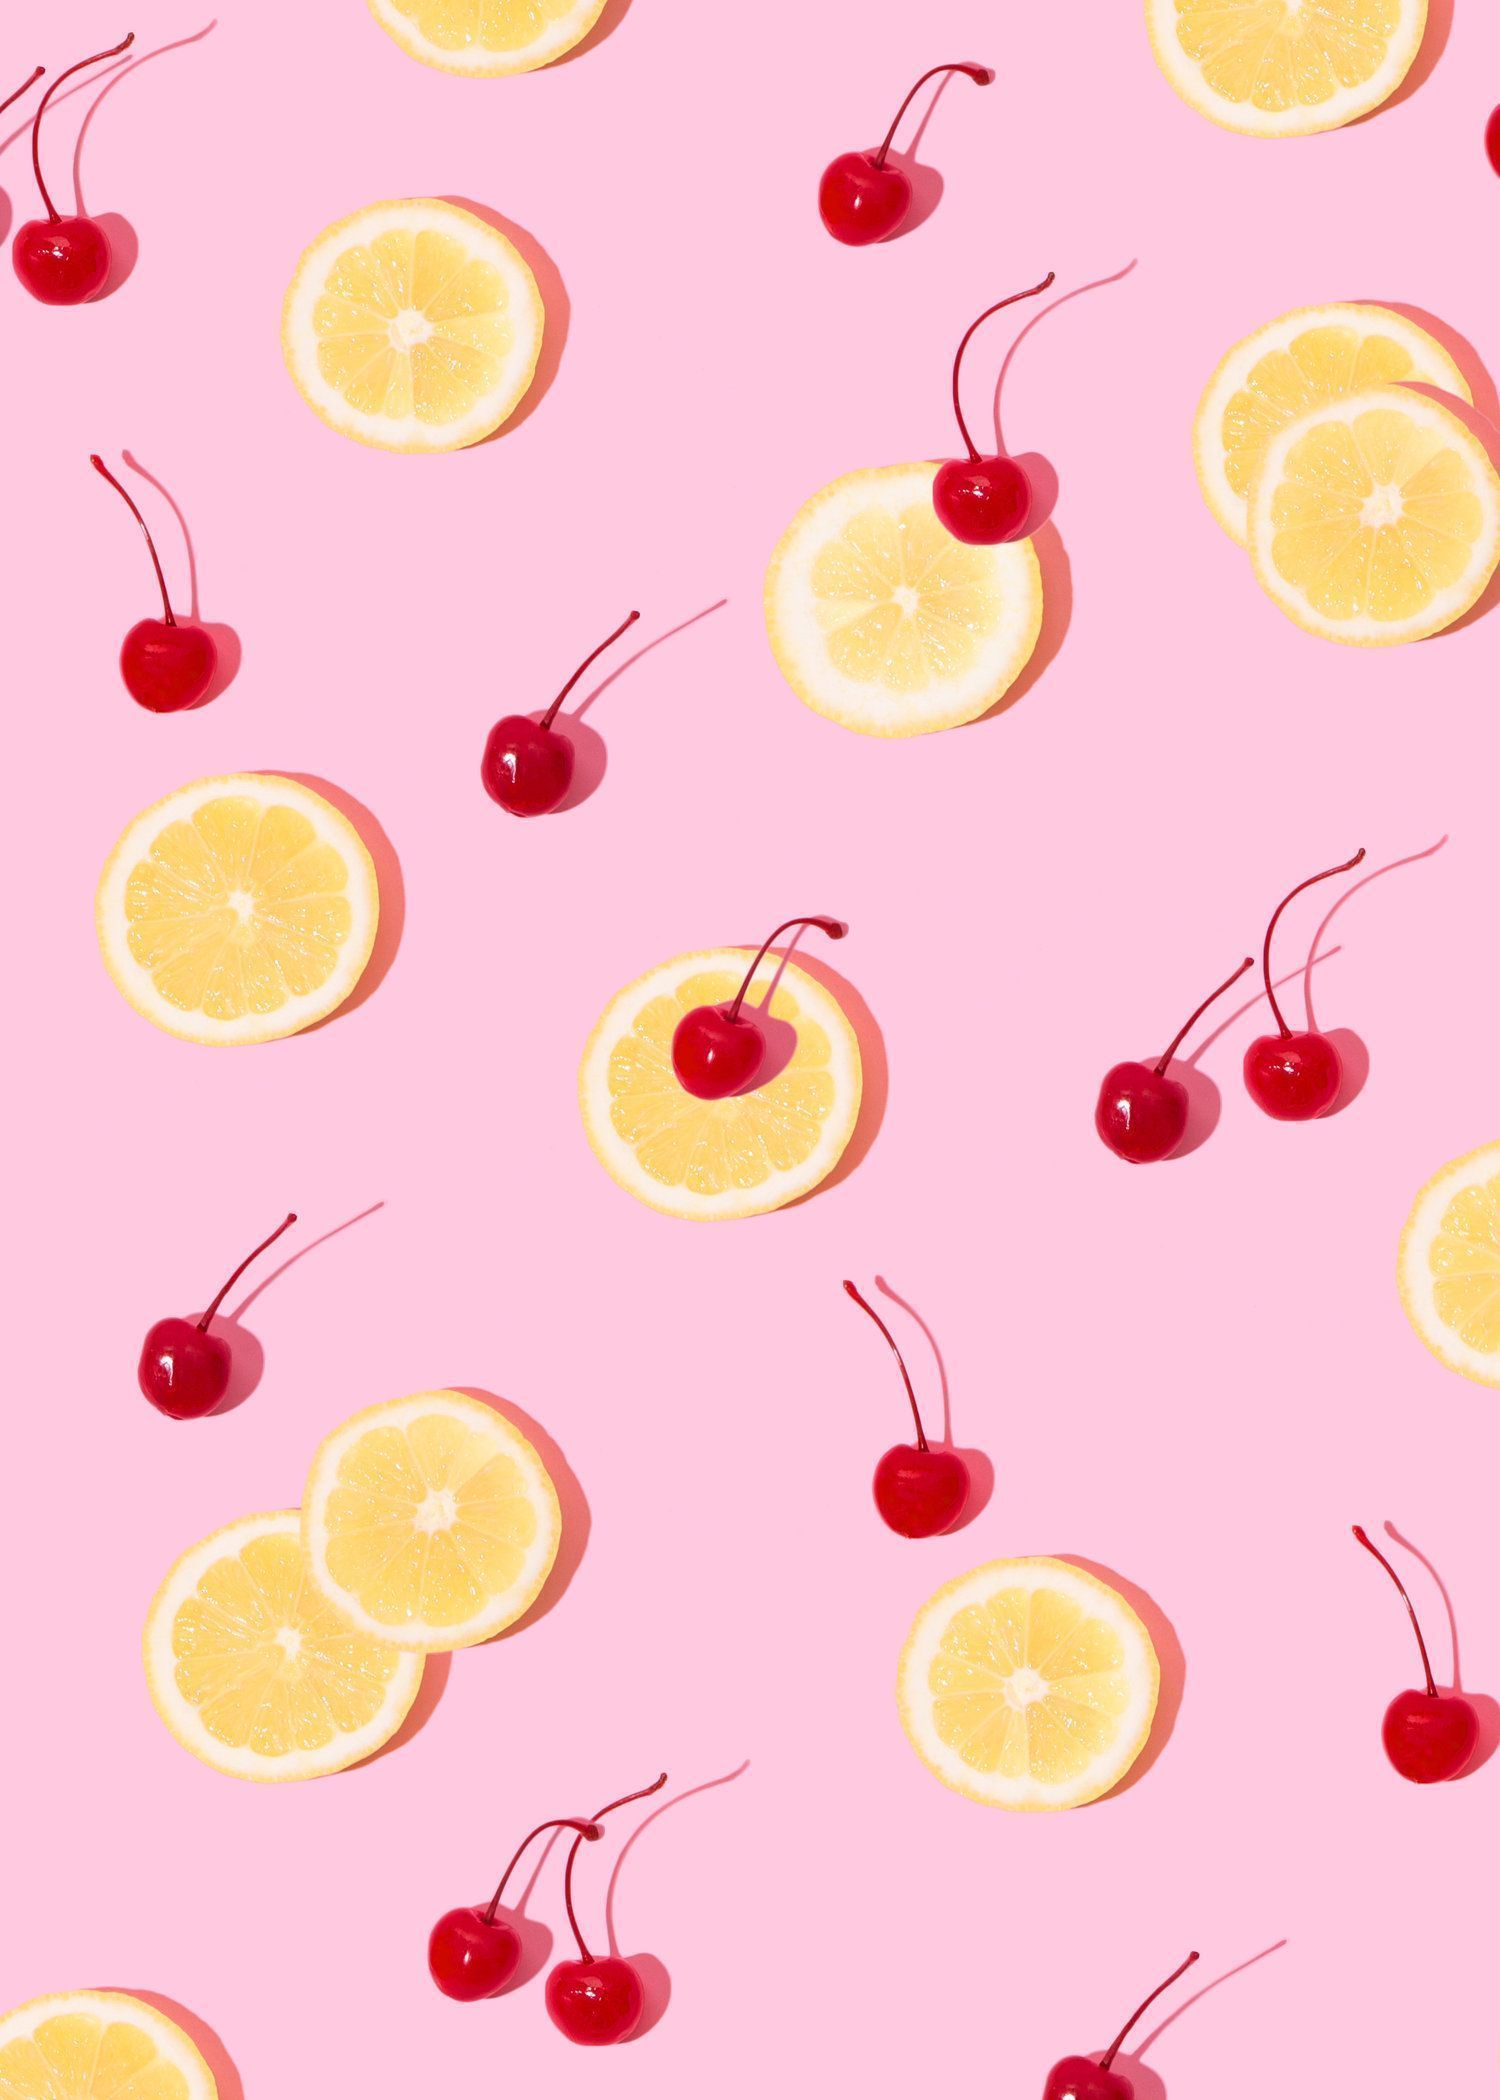 A pattern of lemons and cherries on pink - Lemon, fruit, cherry